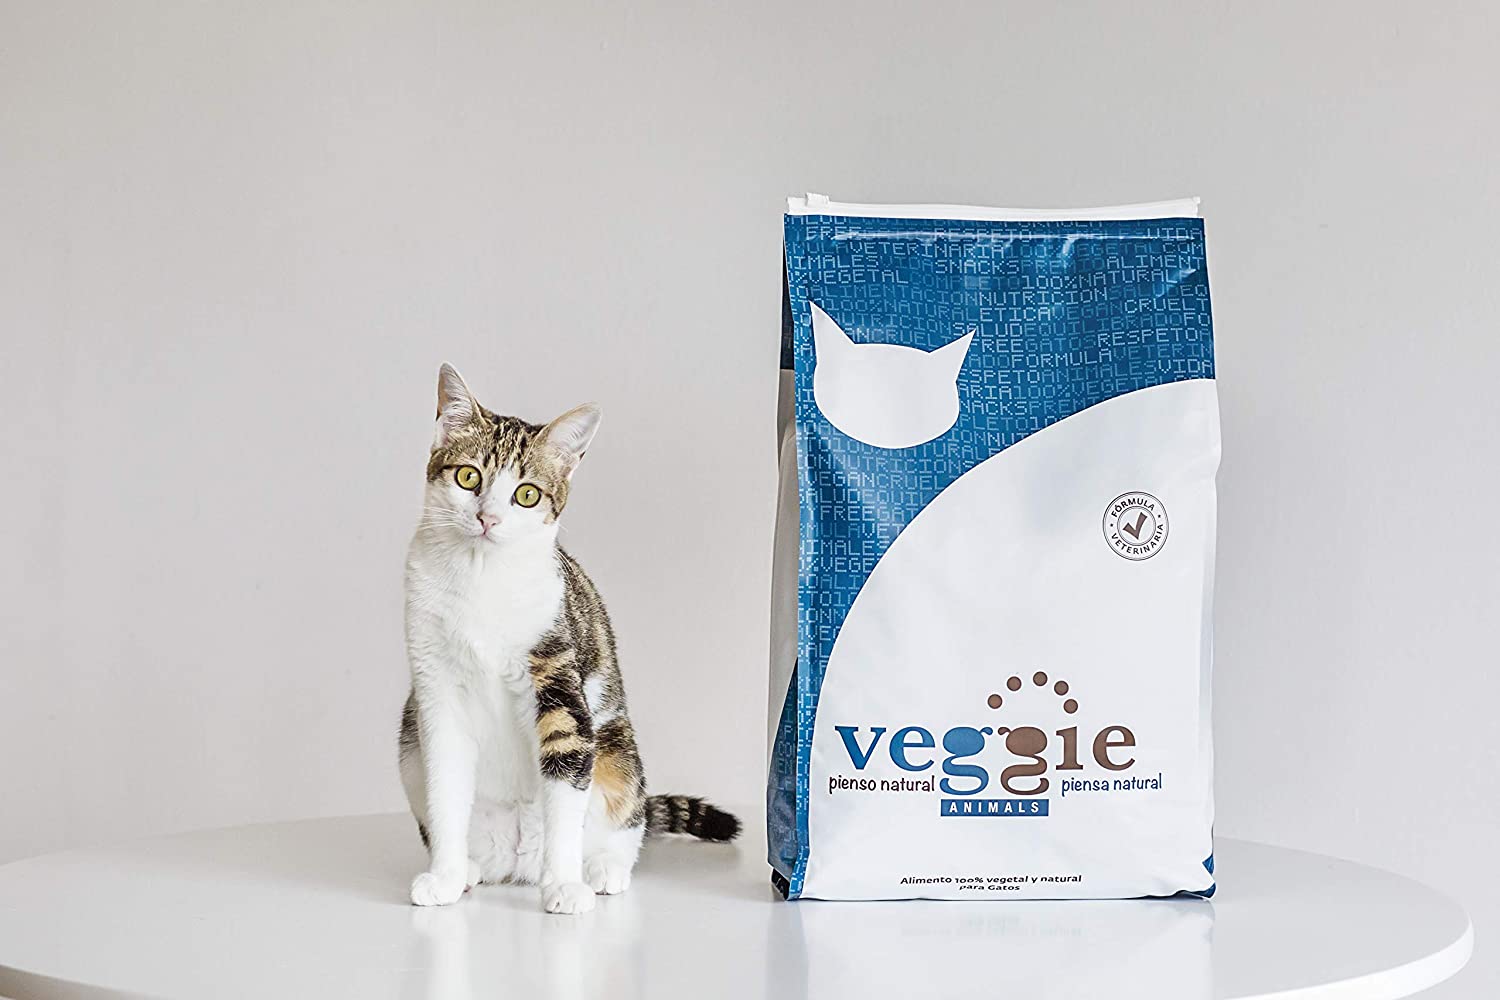  VeggieAnimals - Pienso 100% Vegetal para Gatos, 15 kg 